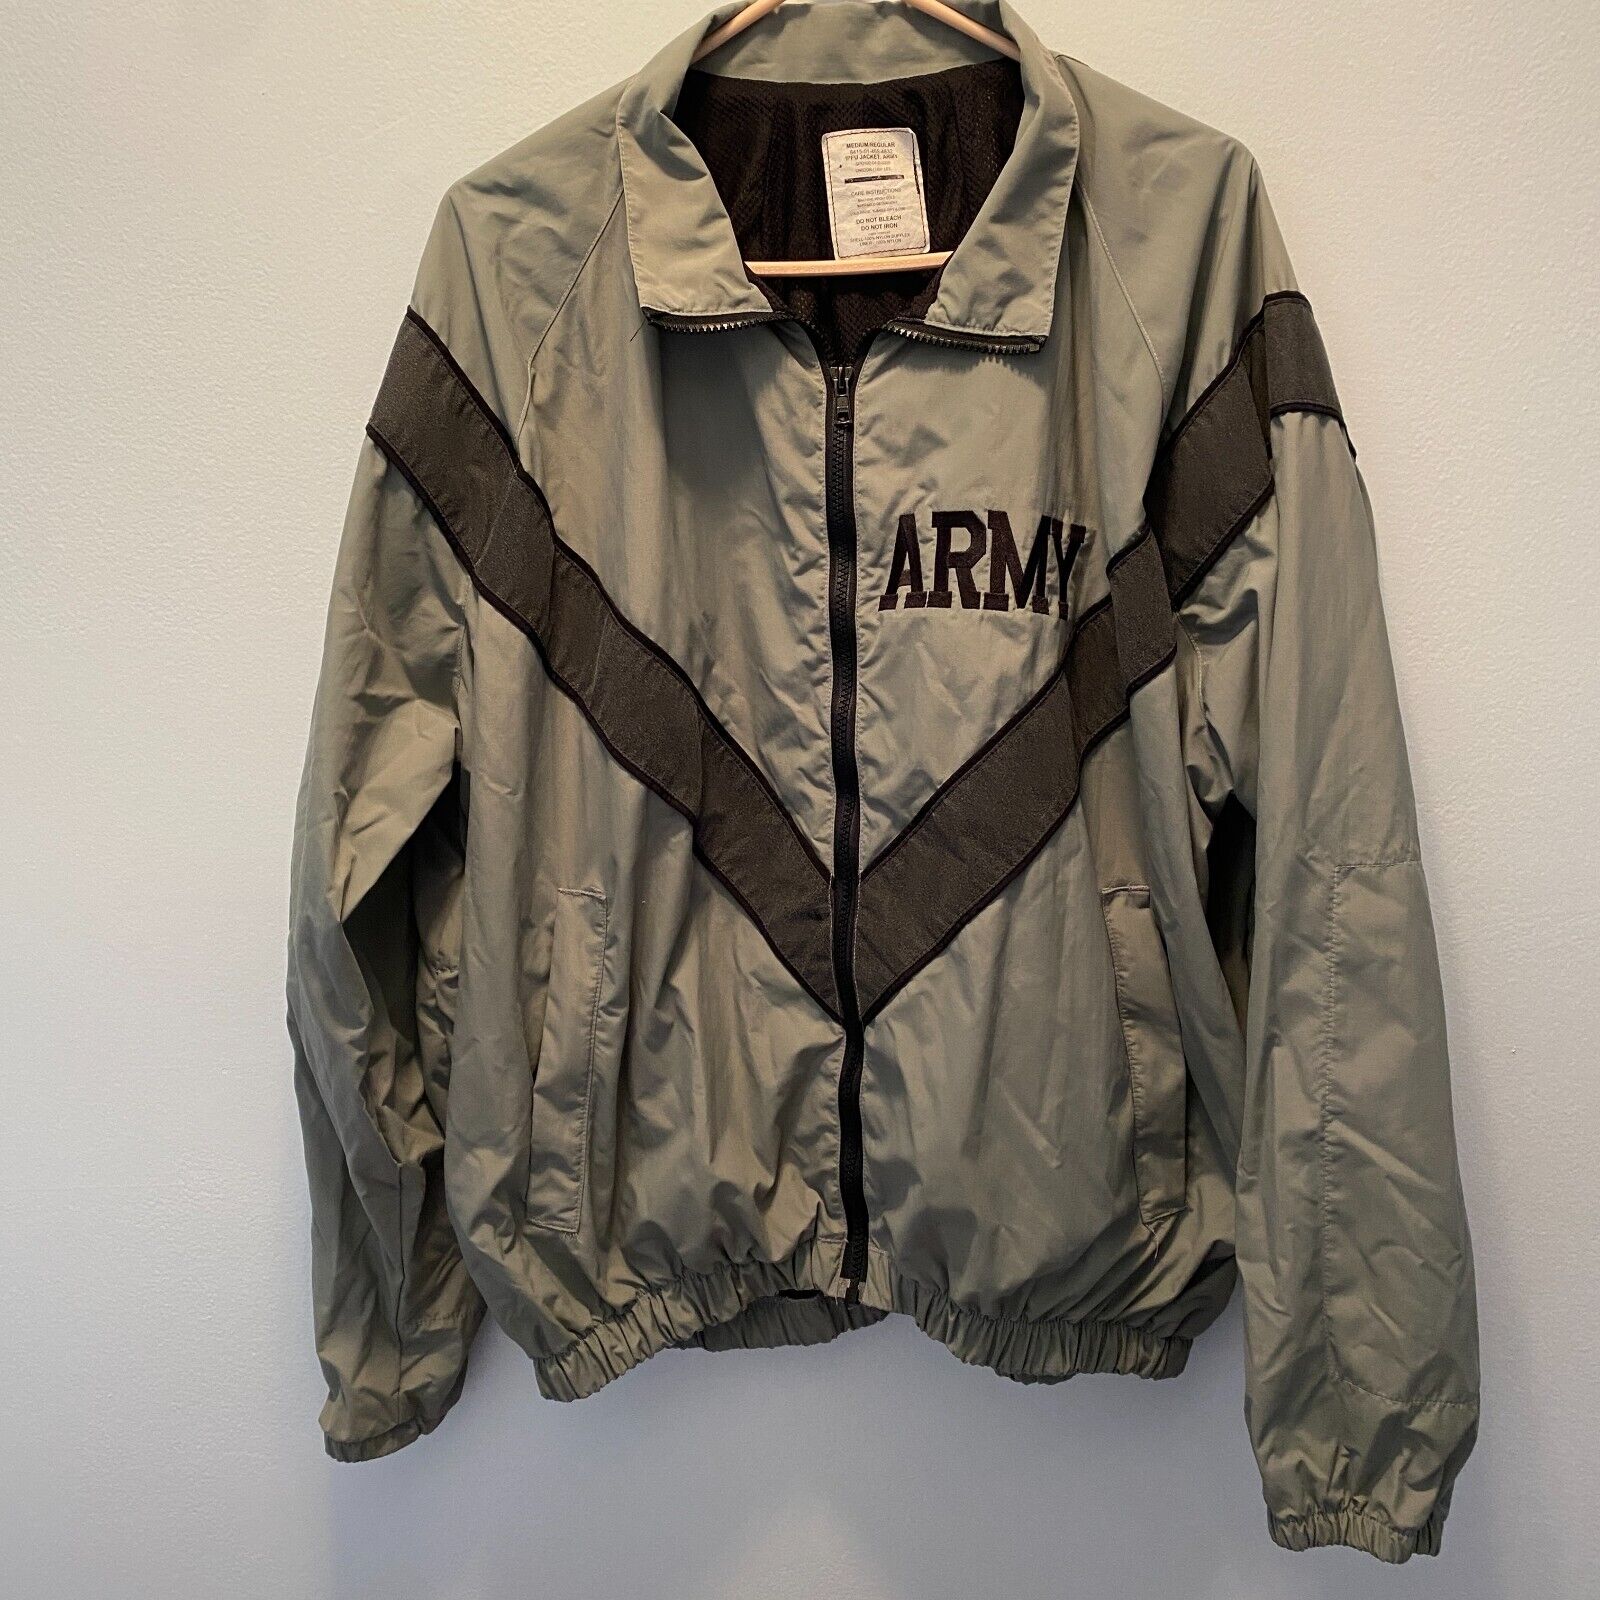 Army IPFU Jacket Large/Regular Reflective PT Wind Breaker Vented Green & Black